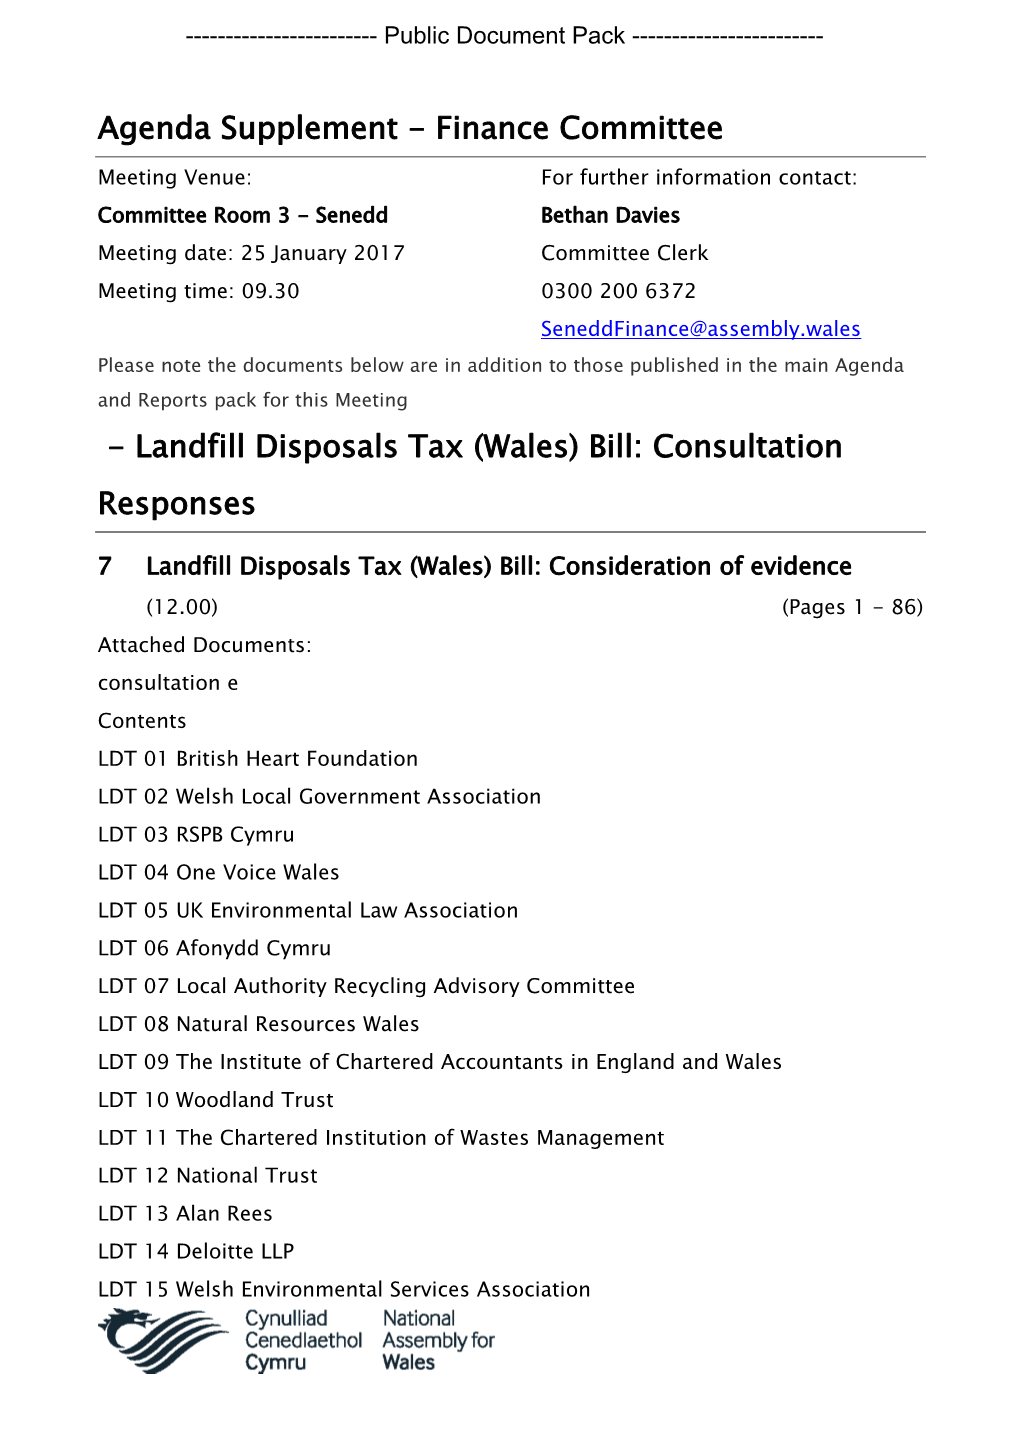 Landfill Disposals Tax (Wales) Bill: Consultation Responses